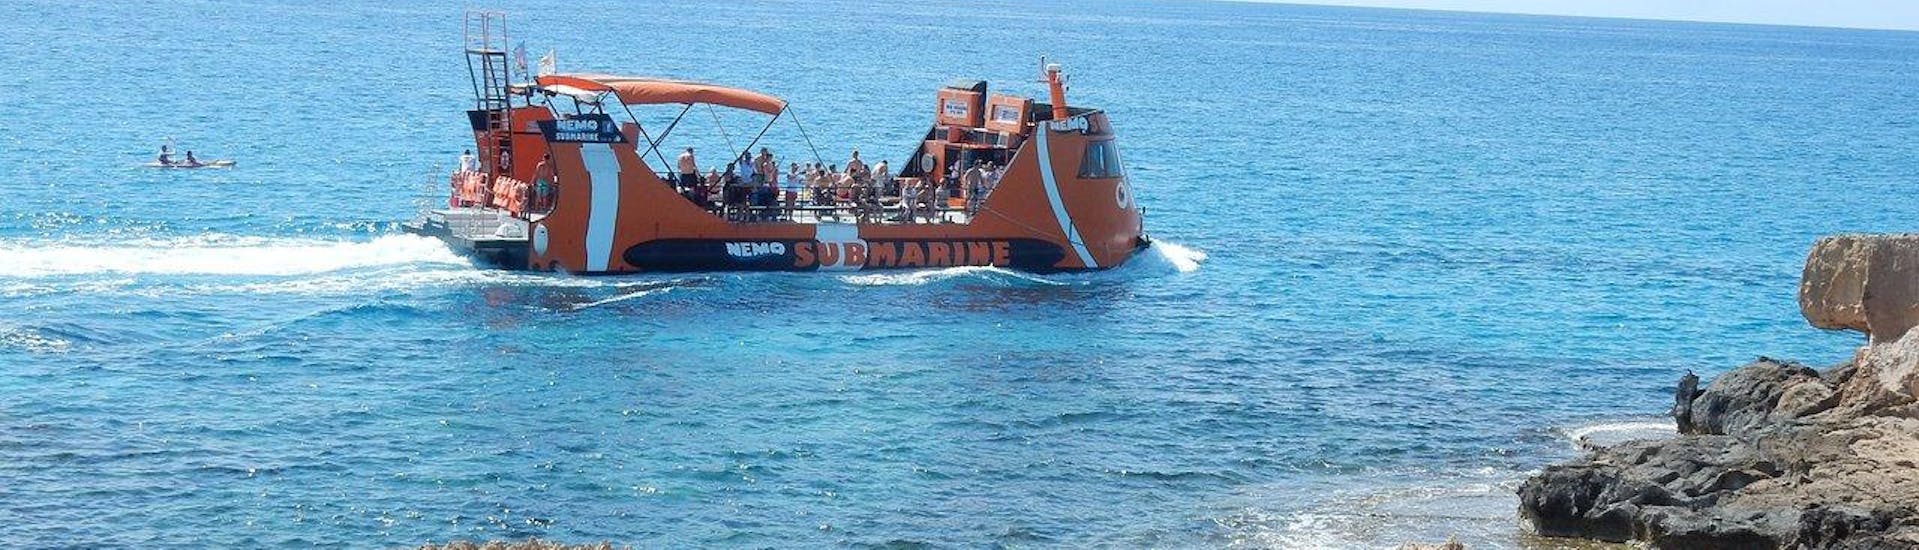 The semi-submarine Nemo navigating the coast of Ayia Napa.